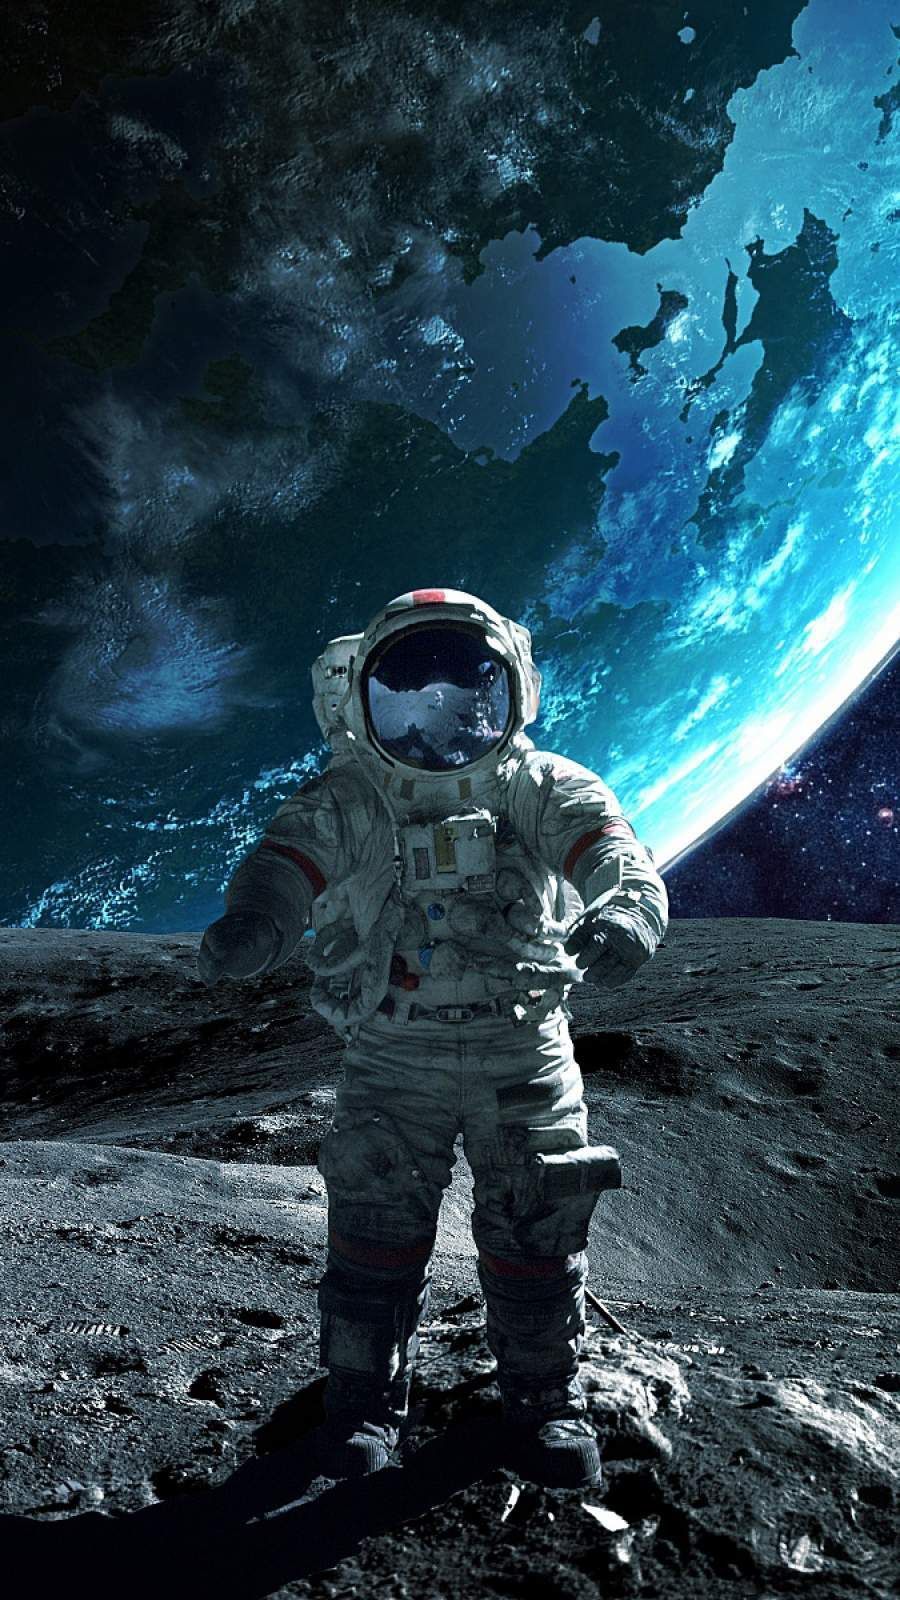 Moon Astronaut iPhone Wallpaper .com